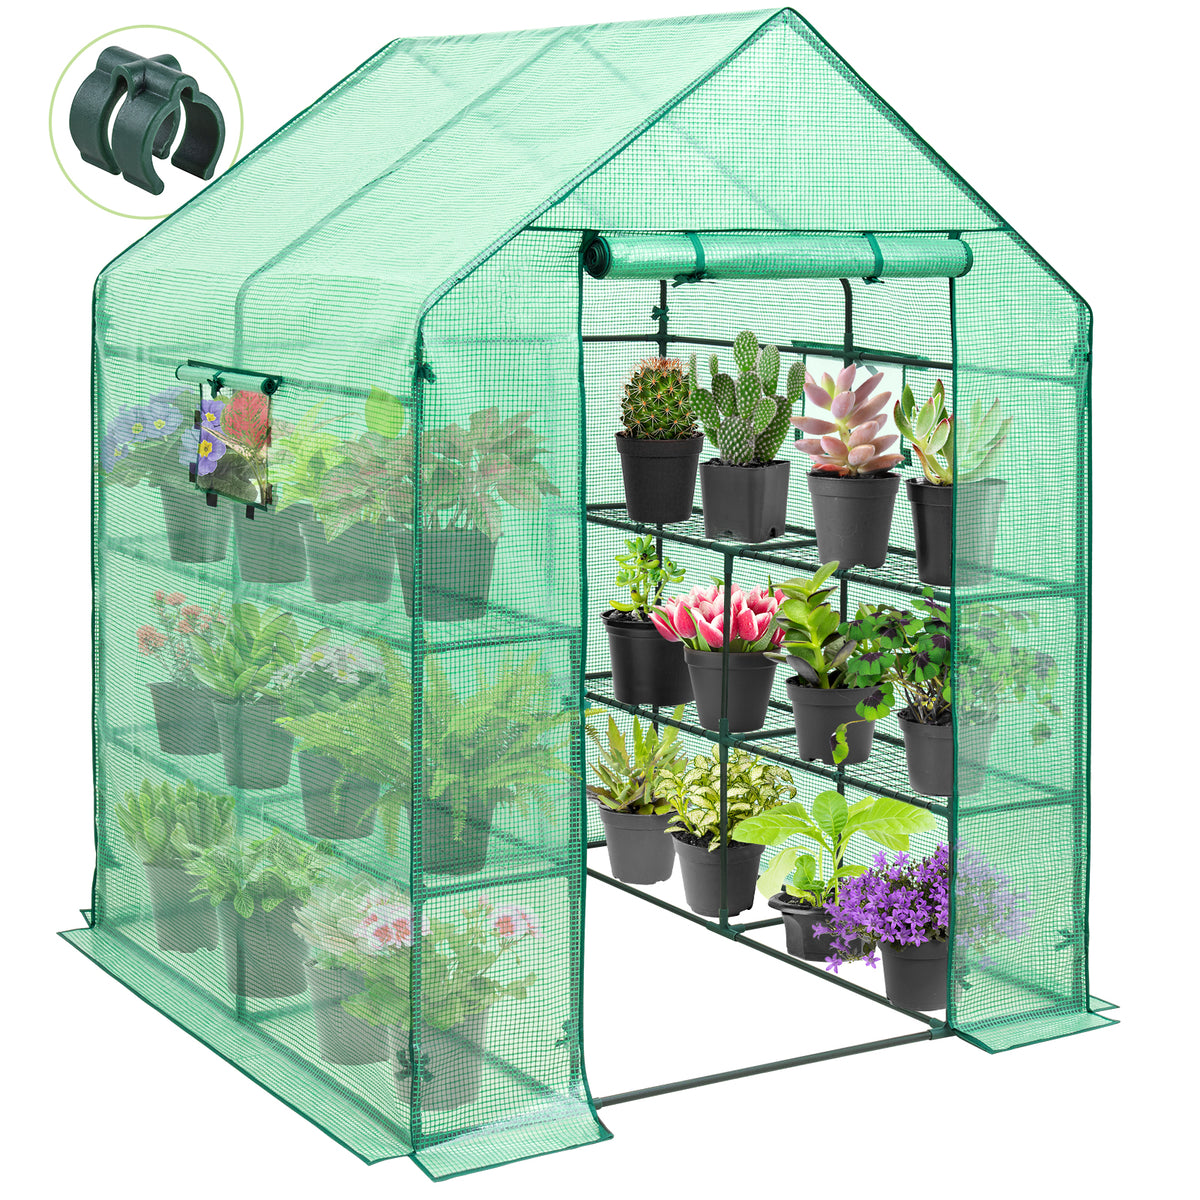 EAGLE PEAK Mini Walk-in Greenhouse Tiers Shelves with Roll-up Zipp